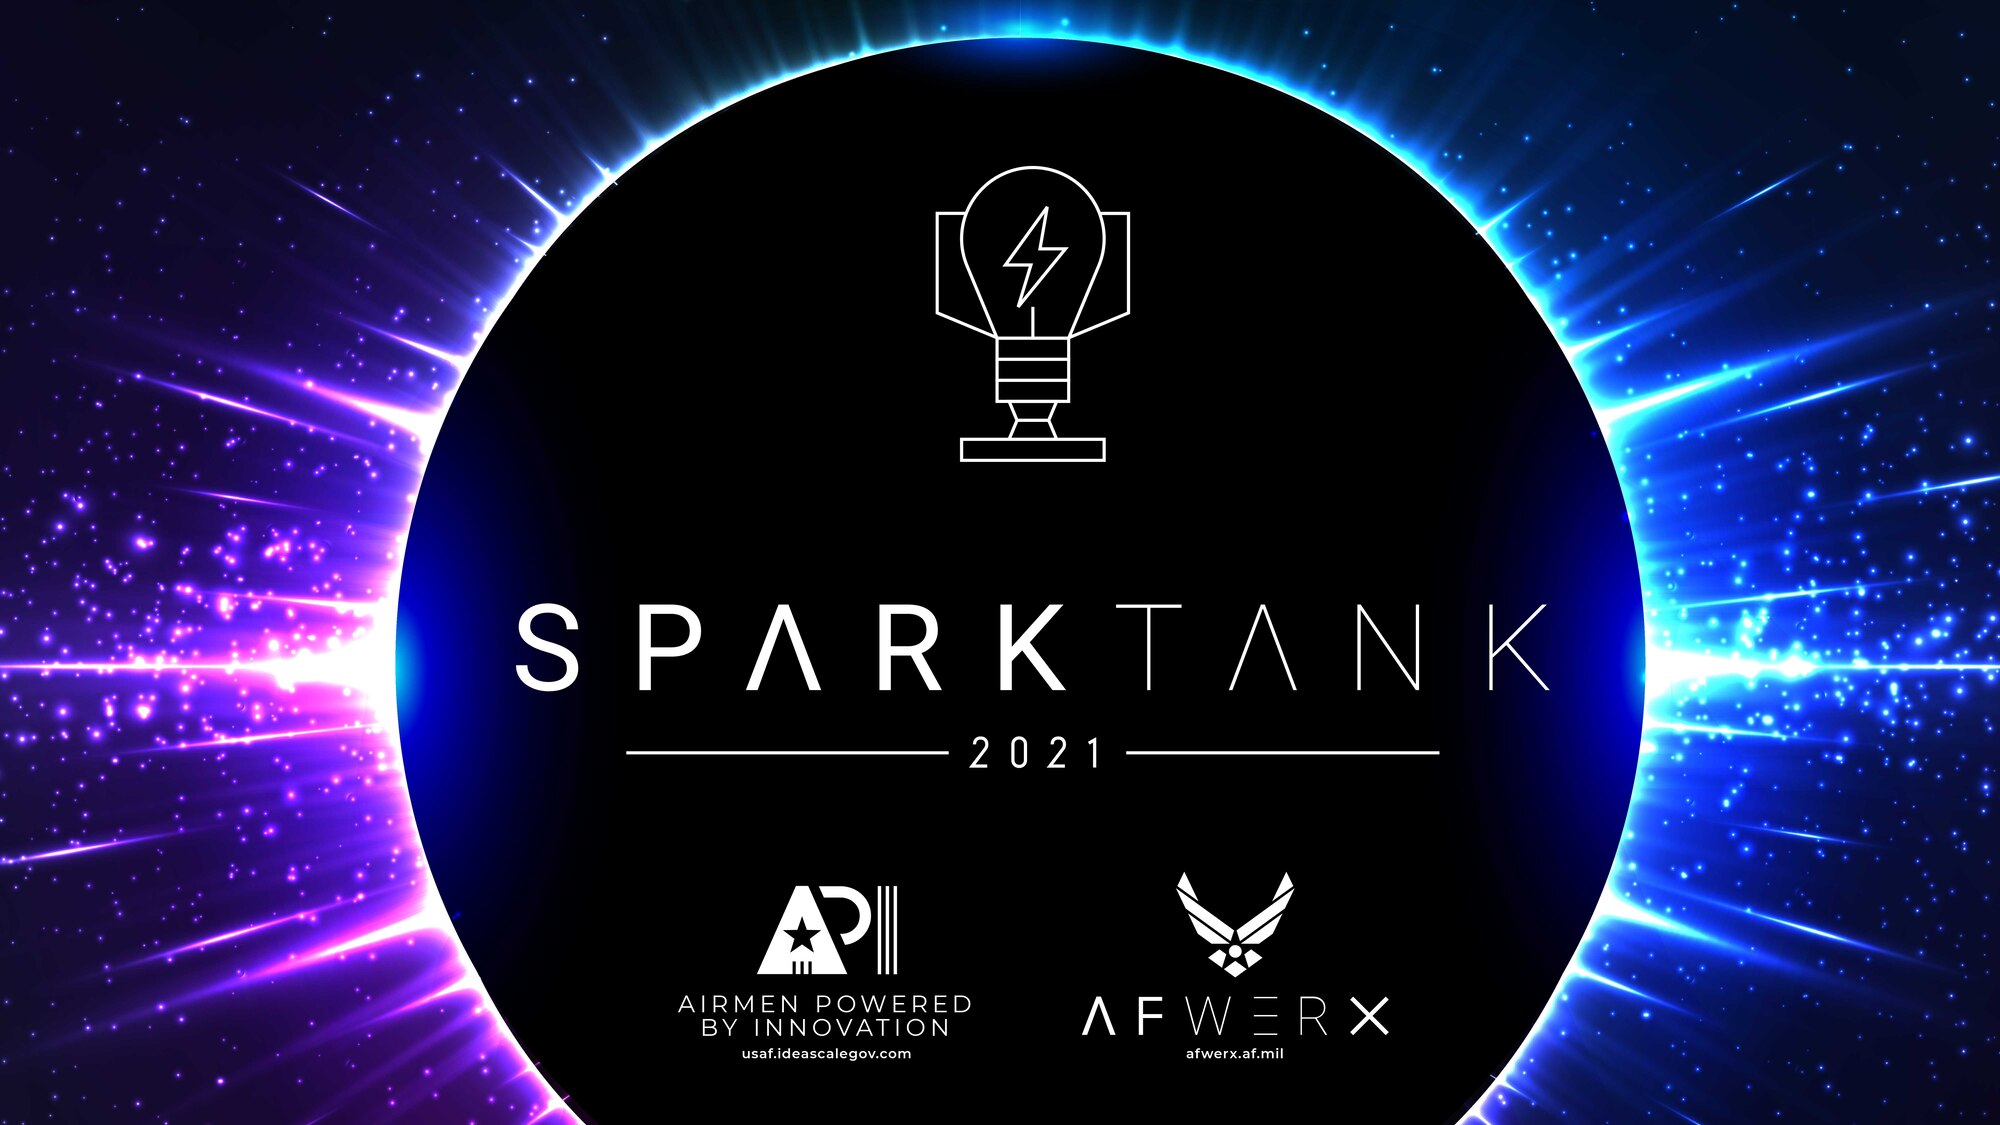 SparkTank - Graphics - 2020 02 14